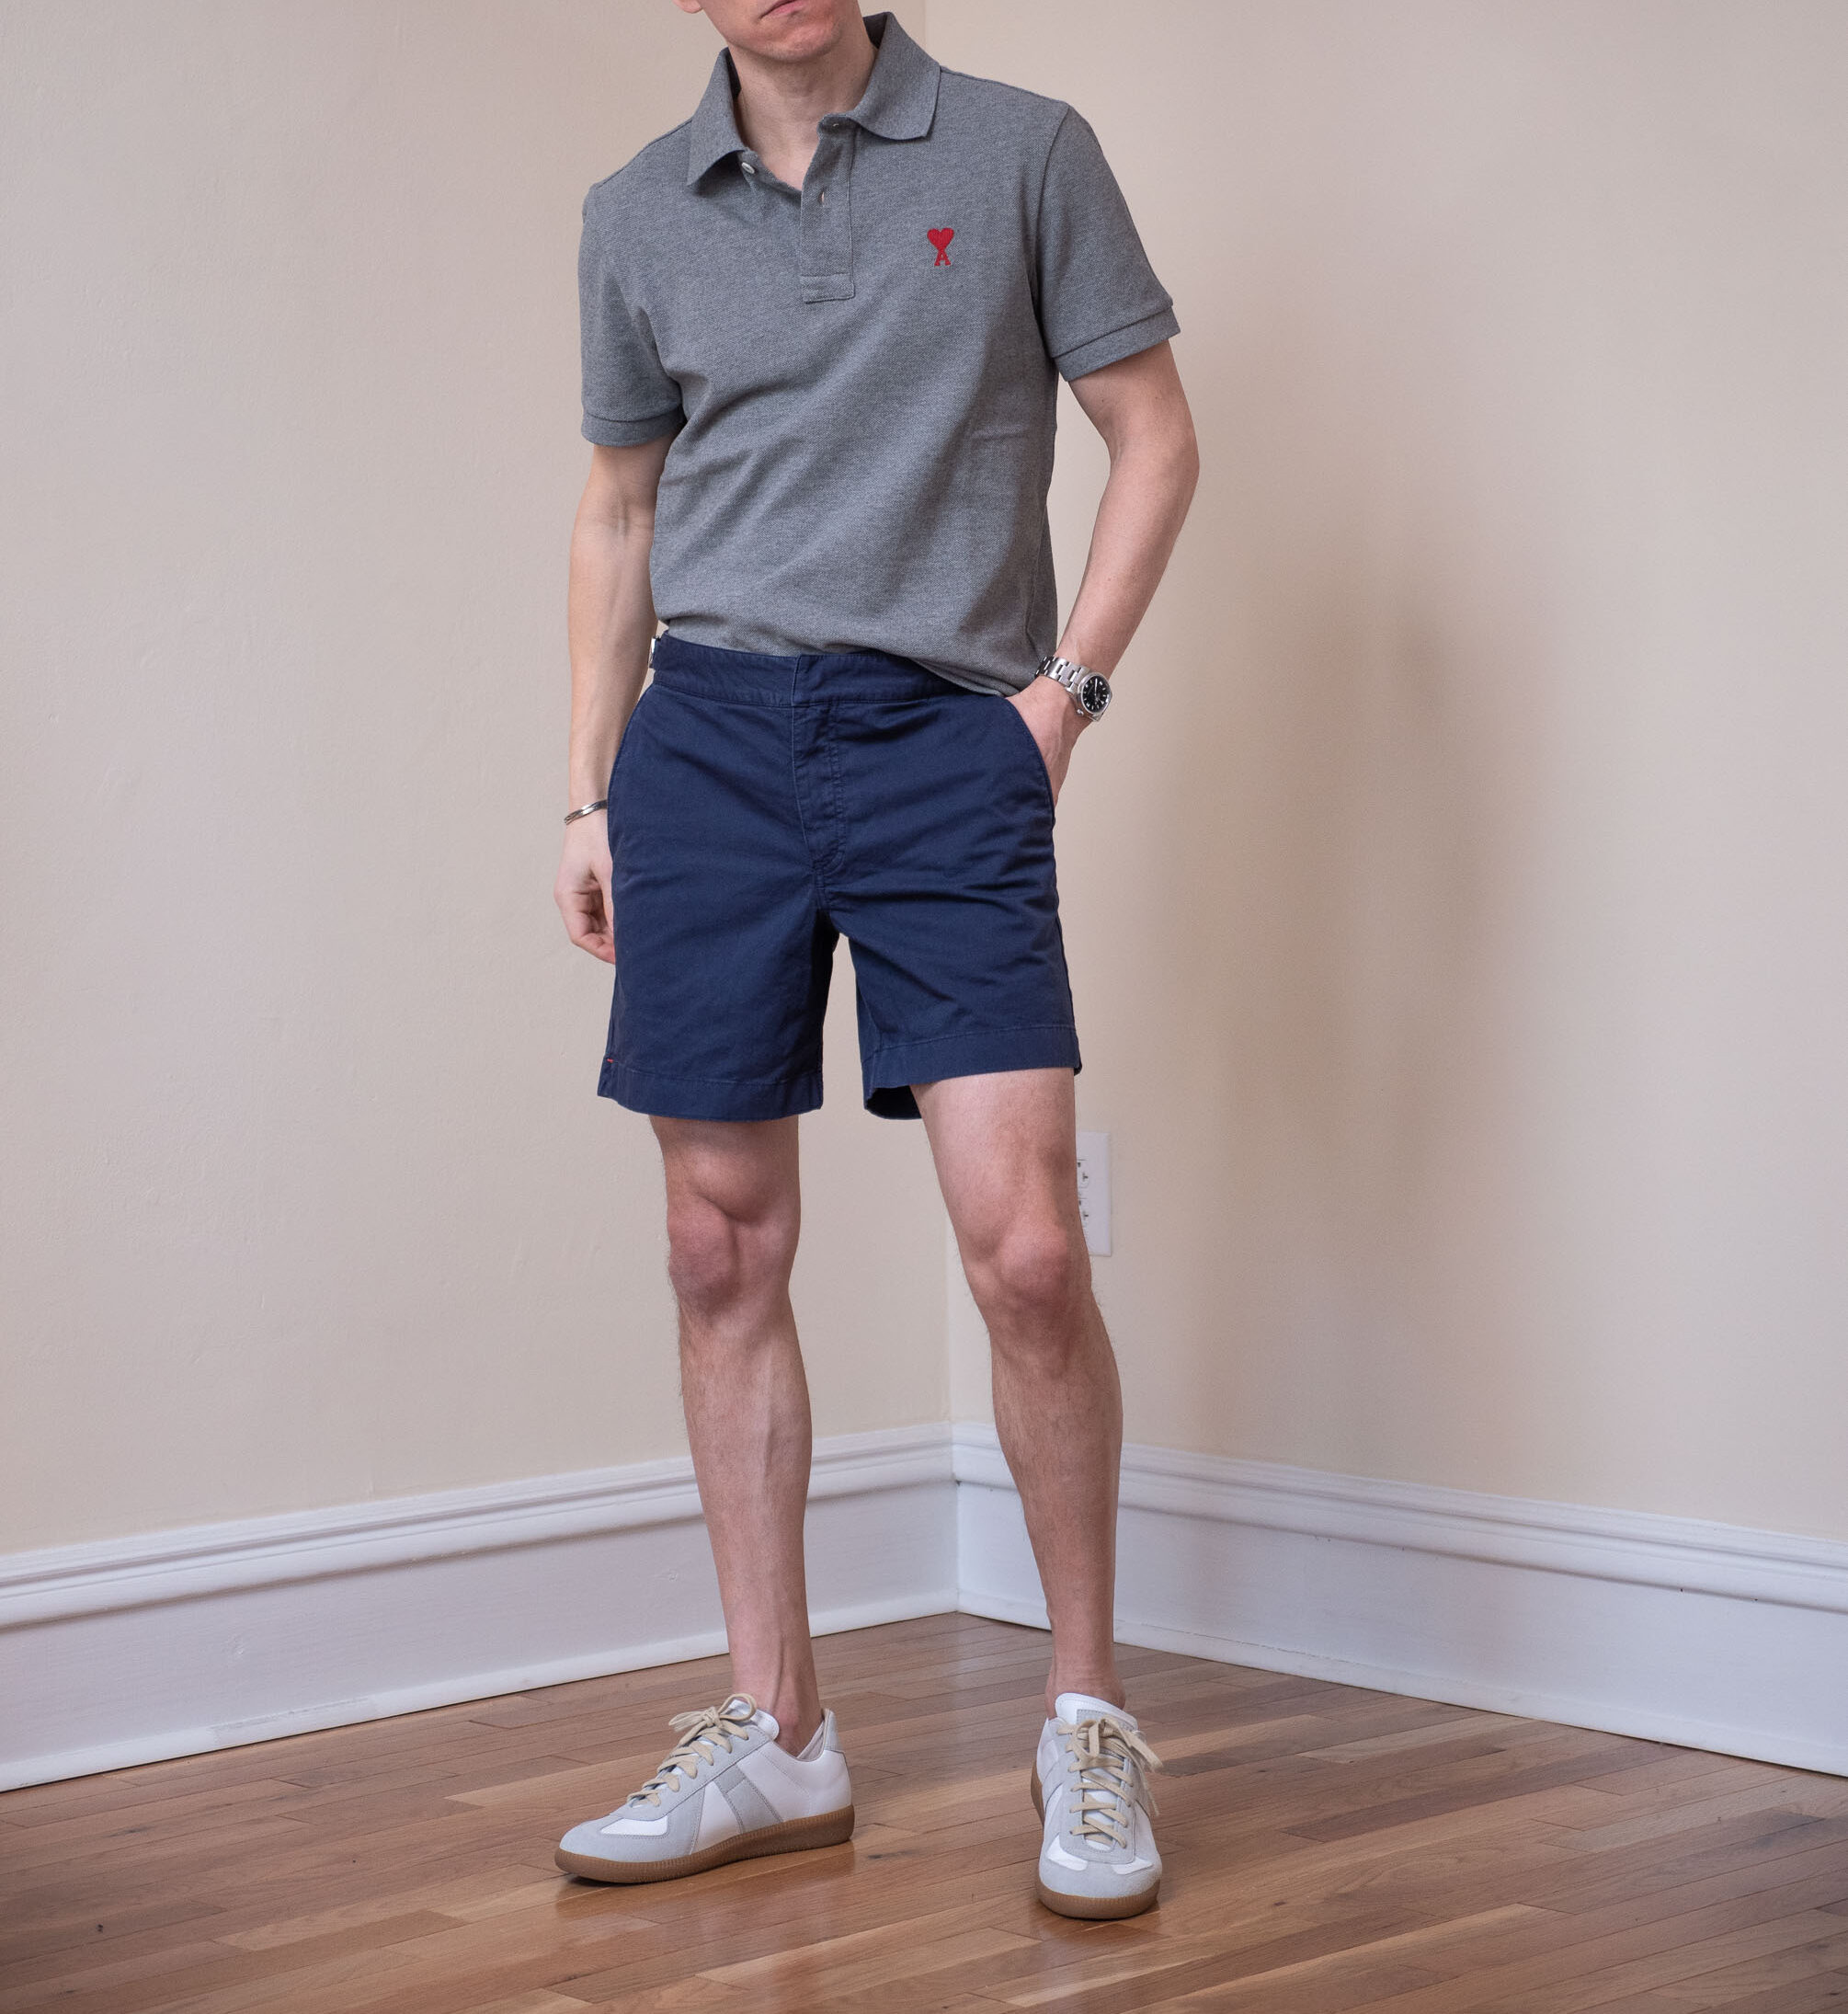 Mens Tear Away Shorts Side Zippers Legs Shorts Basketball Short Full Open  Post Surgery Pants - China Shorts and Pants price